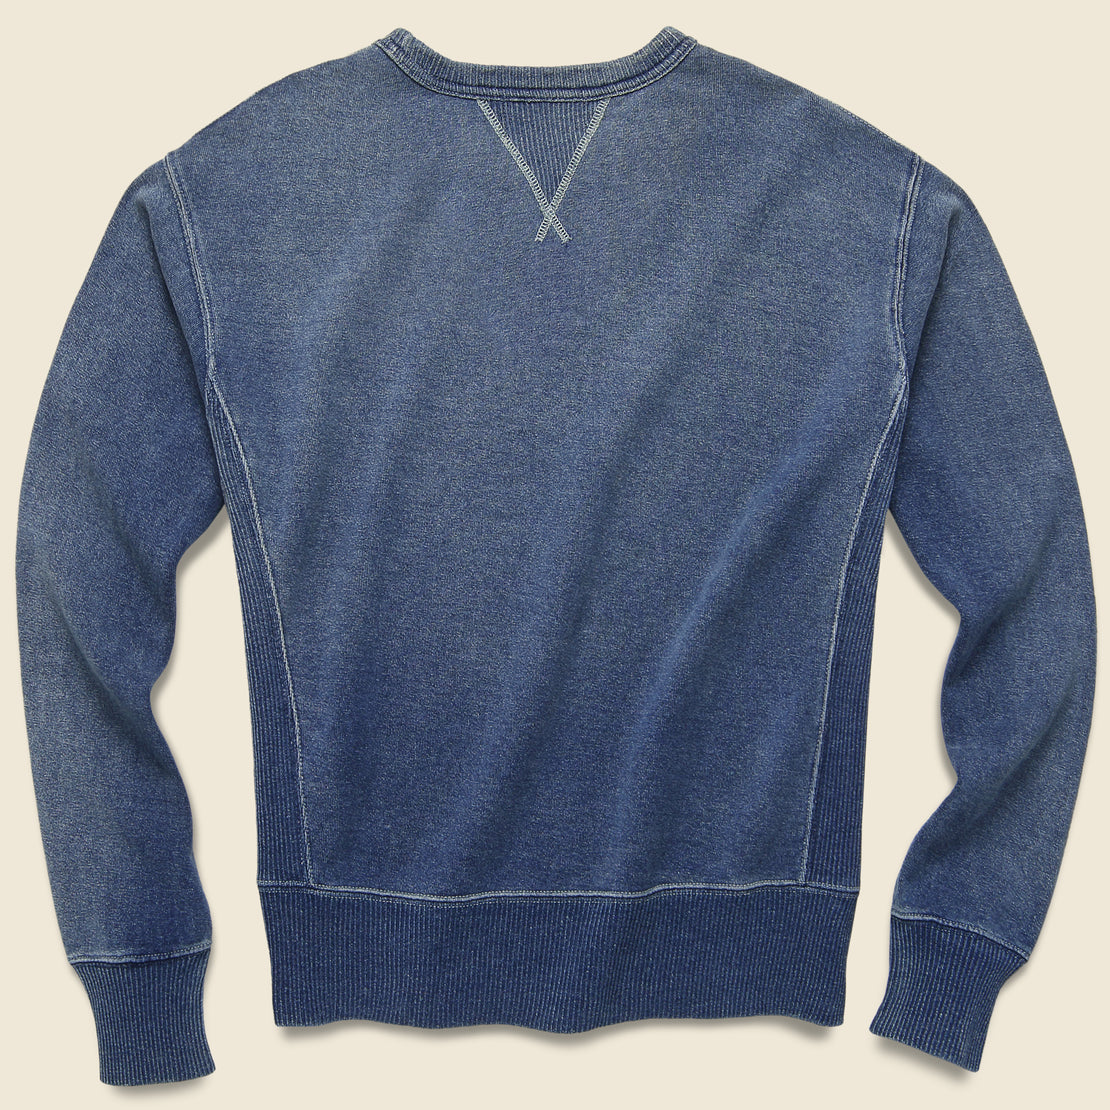 Indigo French Terry Sweatshirt - Washed Blue Indigo - RRL - STAG Provisions - Tops - Fleece / Sweatshirt